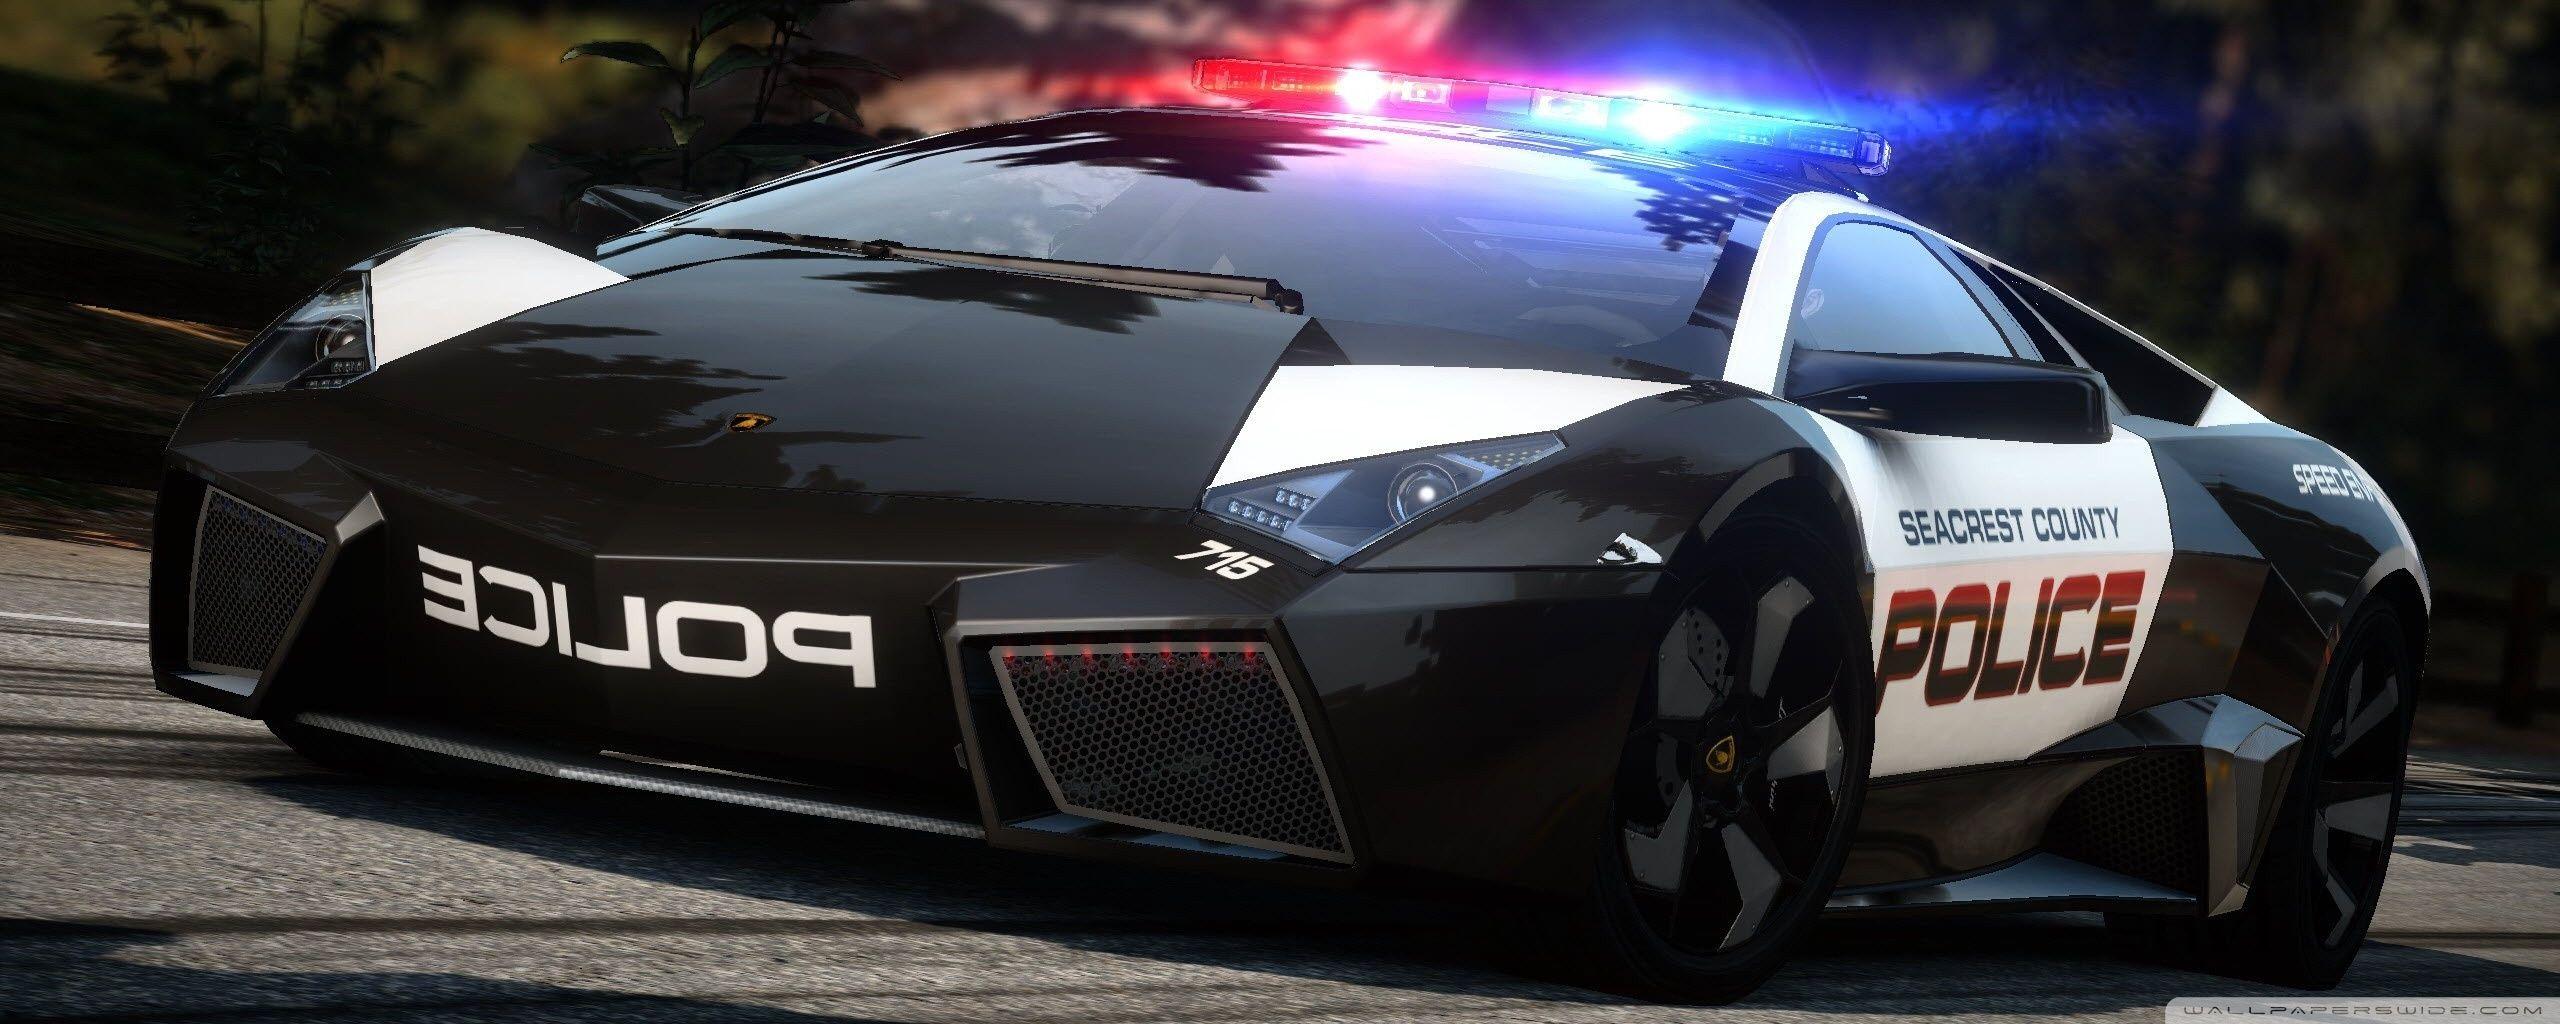 Need For Speed Hot Pursuit Lamborghini Police Car ❤ 4K HD Desktop